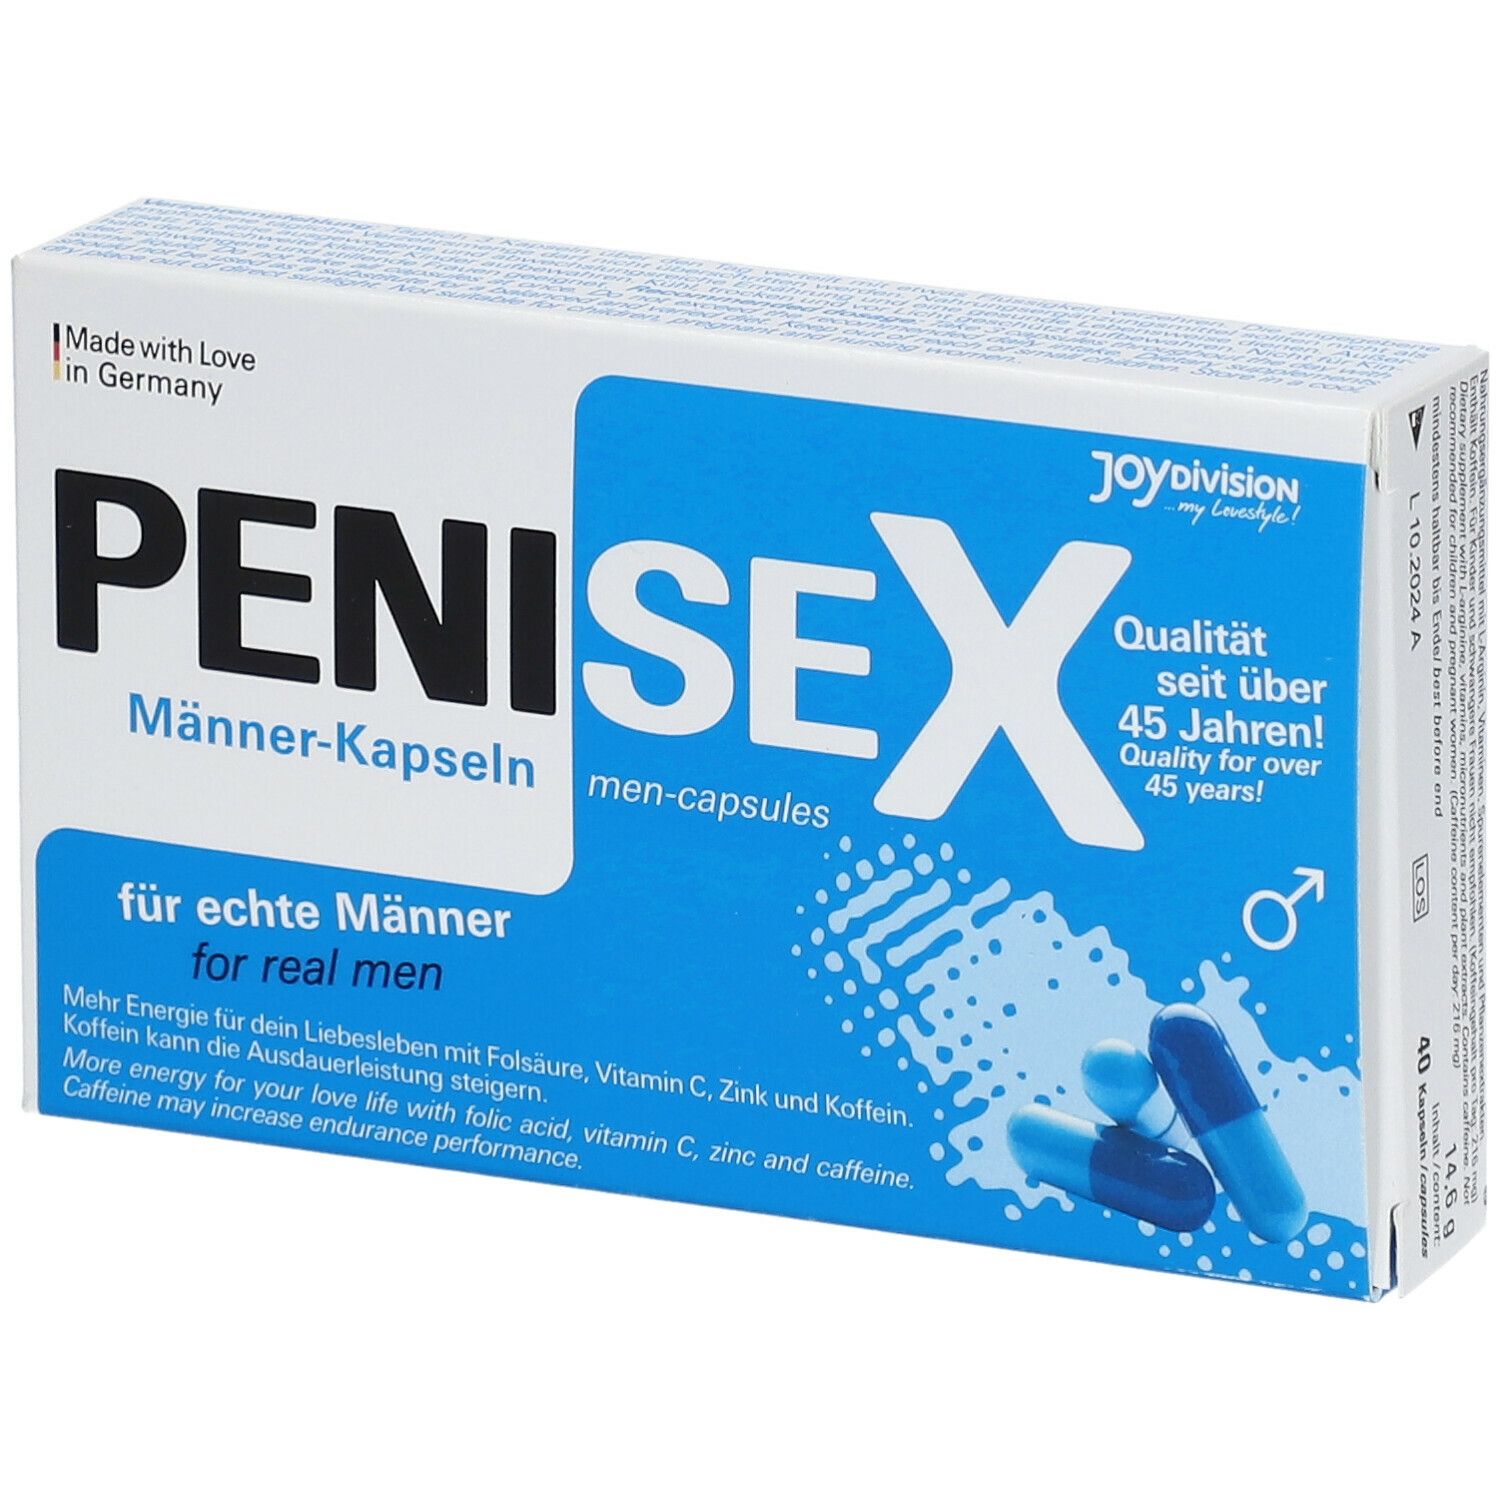 Image of PENISEX Männer-Kapseln